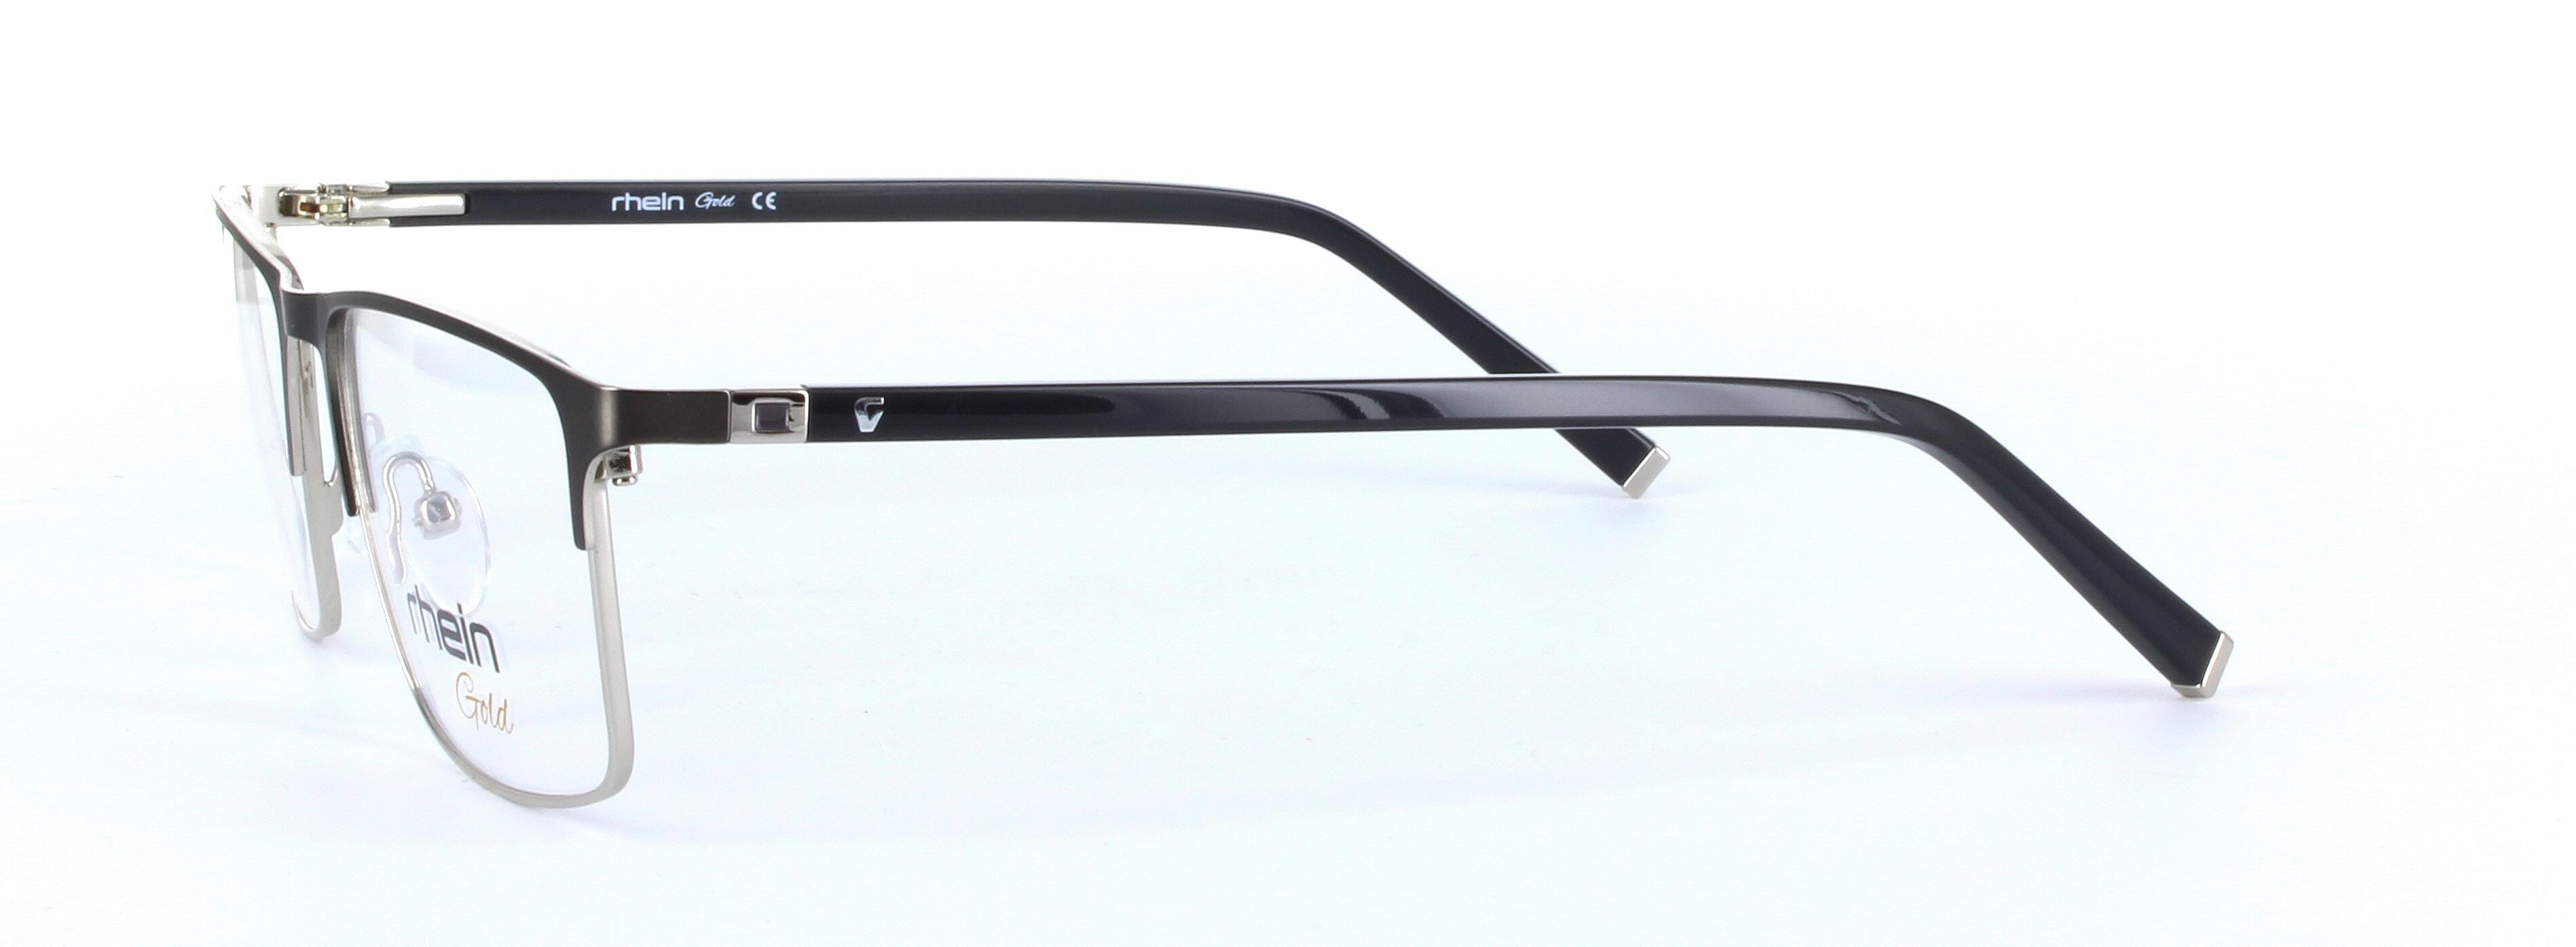 Faith Brown Full Rim Oval Rectangular Metal Glasses - Image View 2